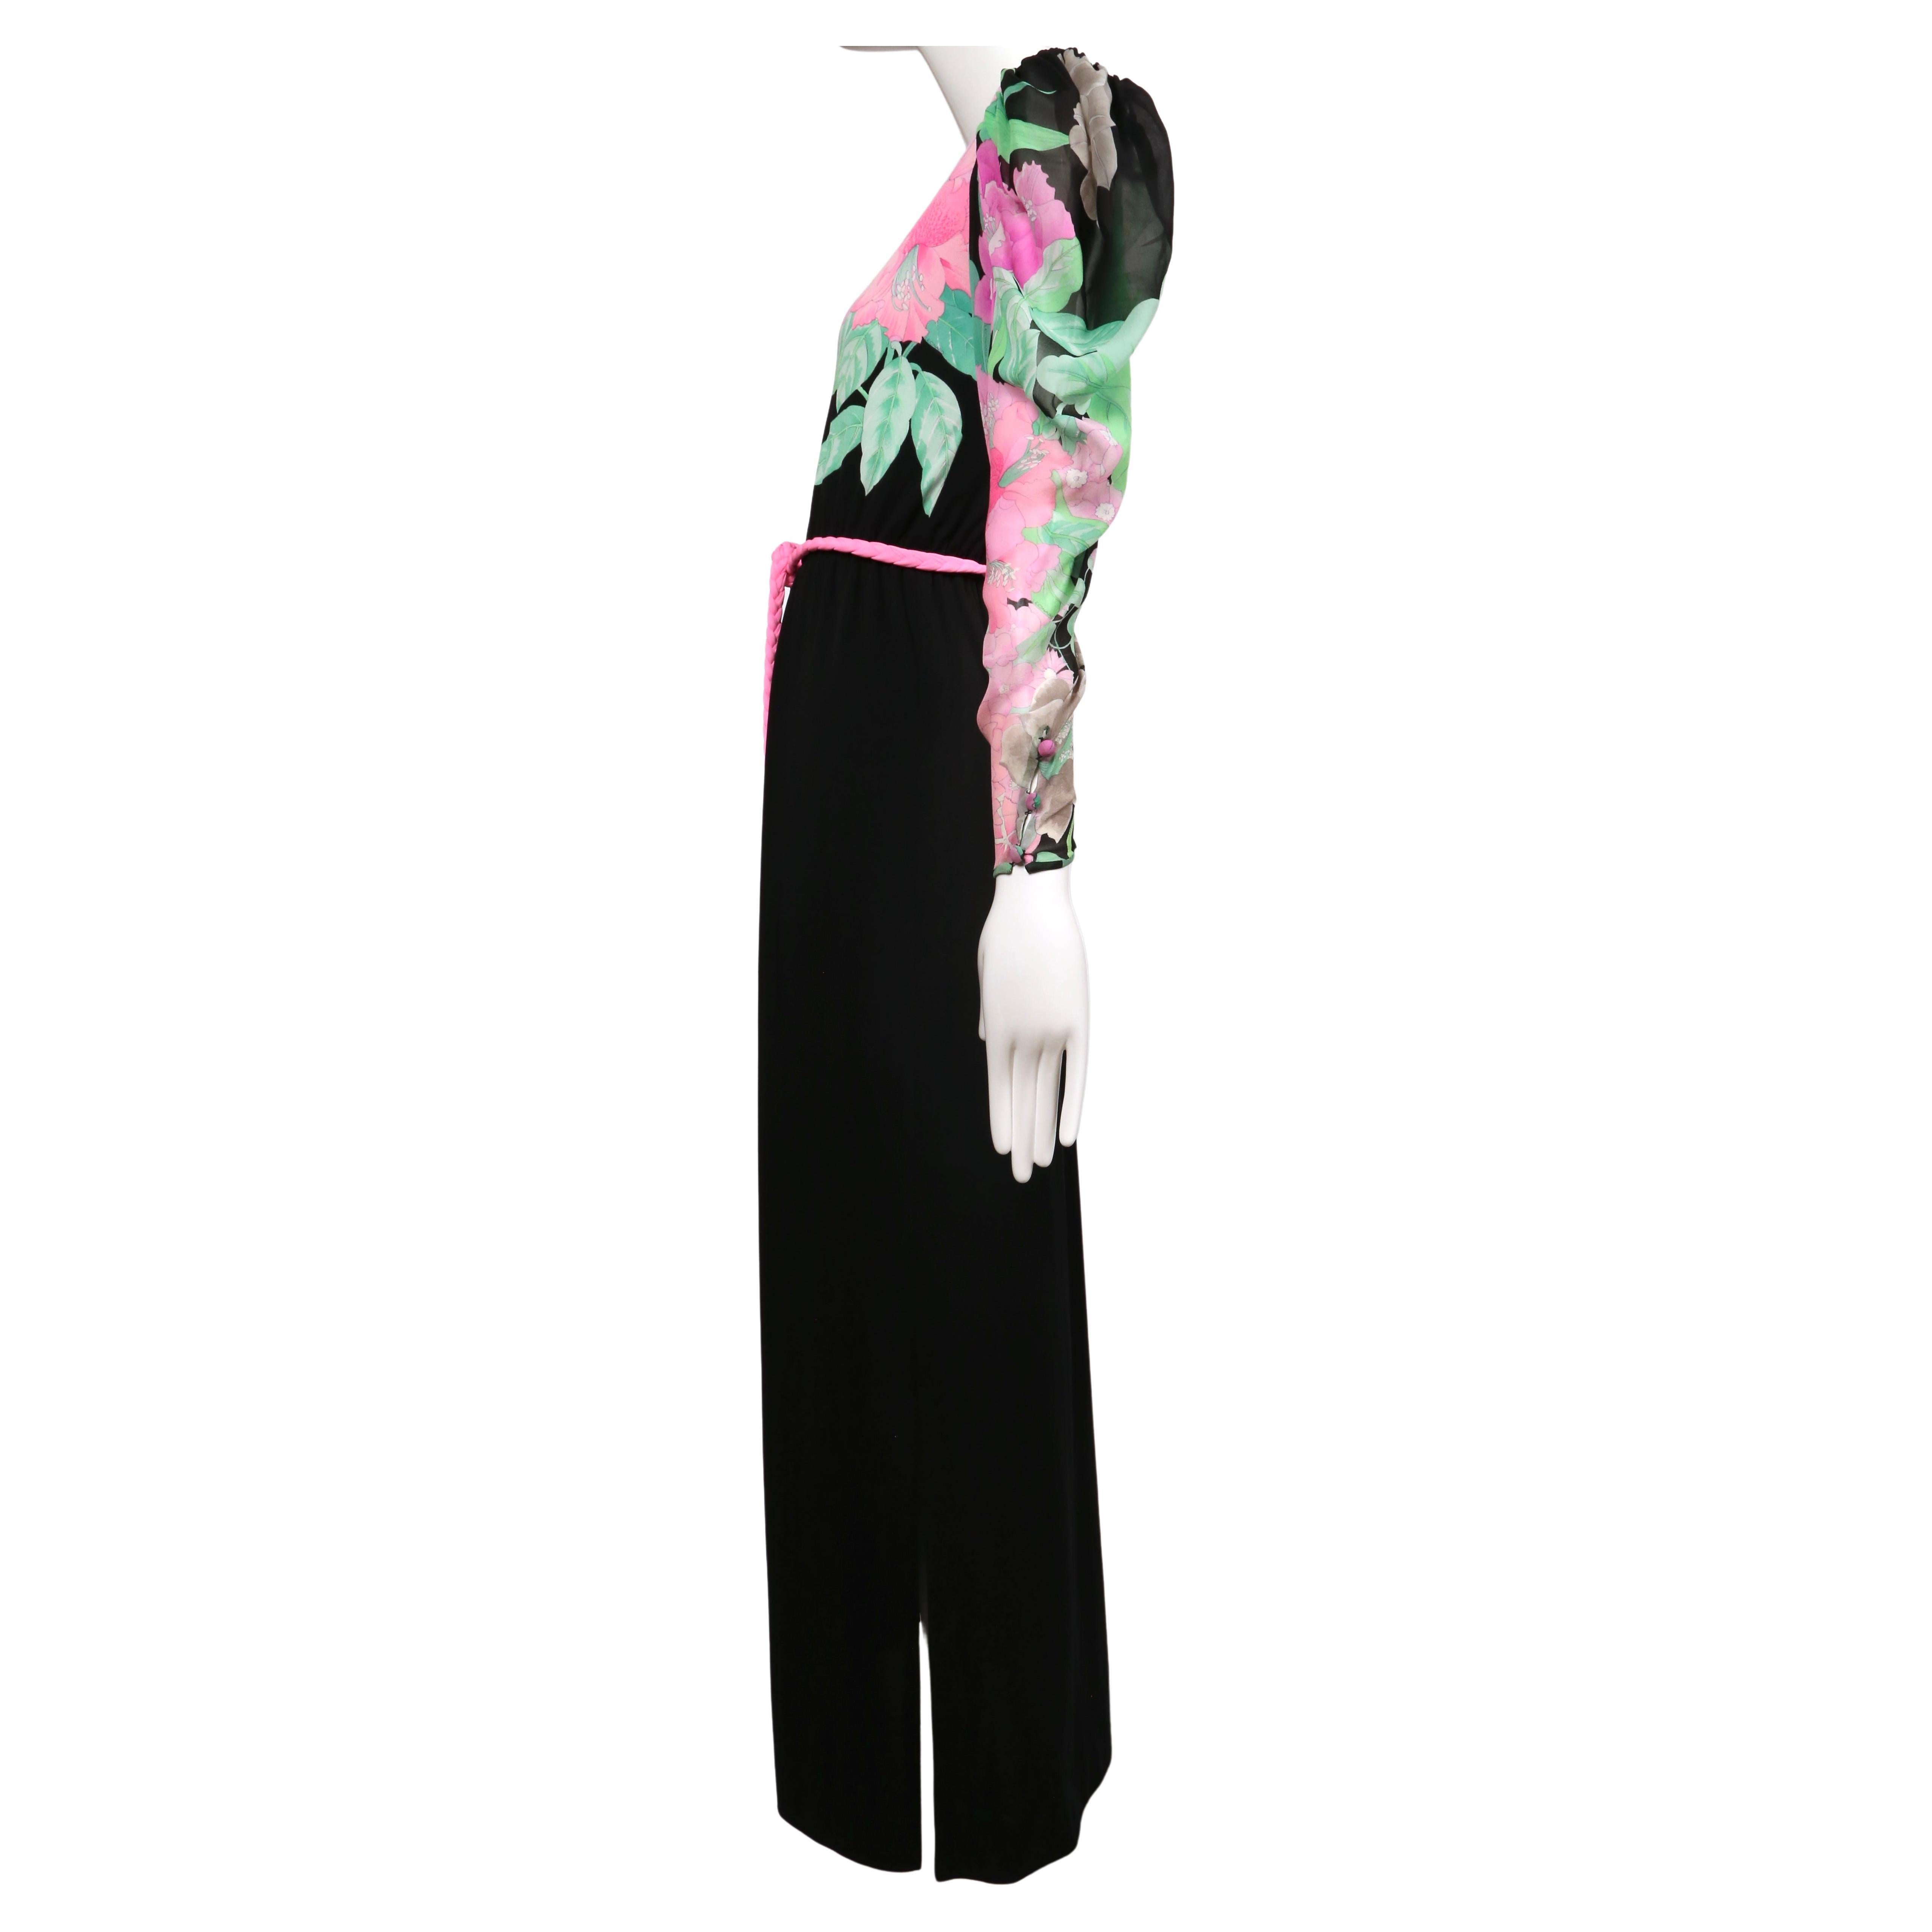 1970's LEONARD of Paris floral printed silk jersey dress For Sale 2